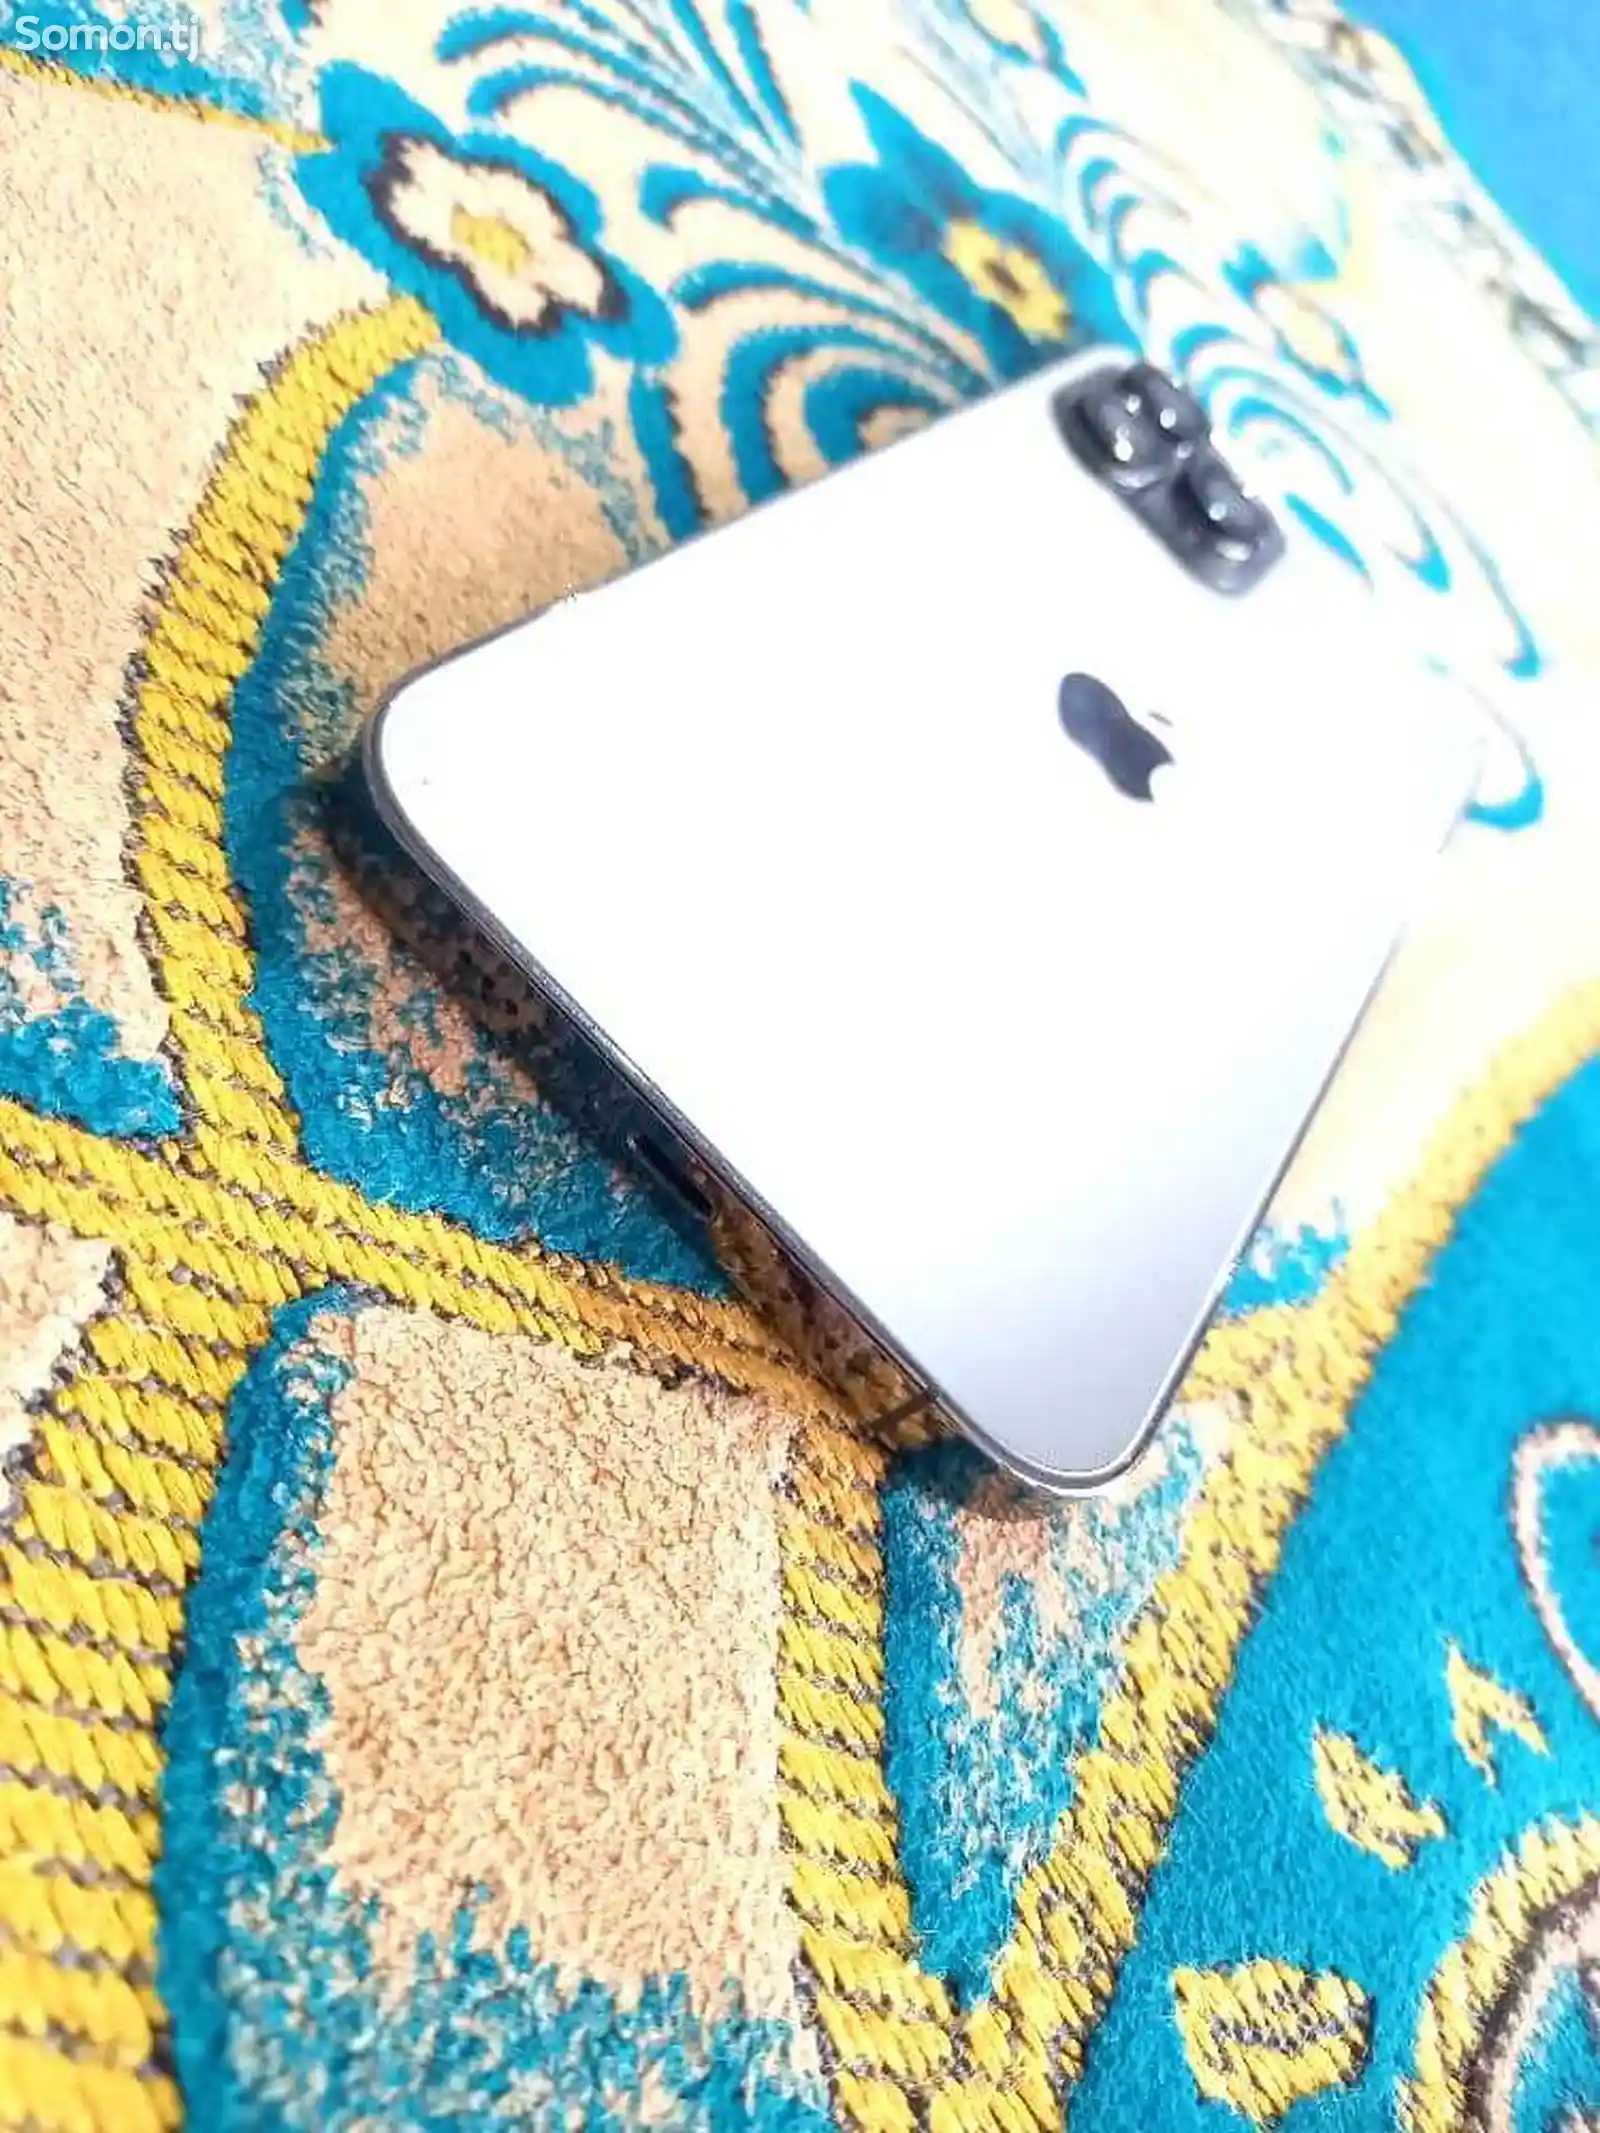 Apple iPhone 12 Pro Max, 128 gb, Pacific Blue-2